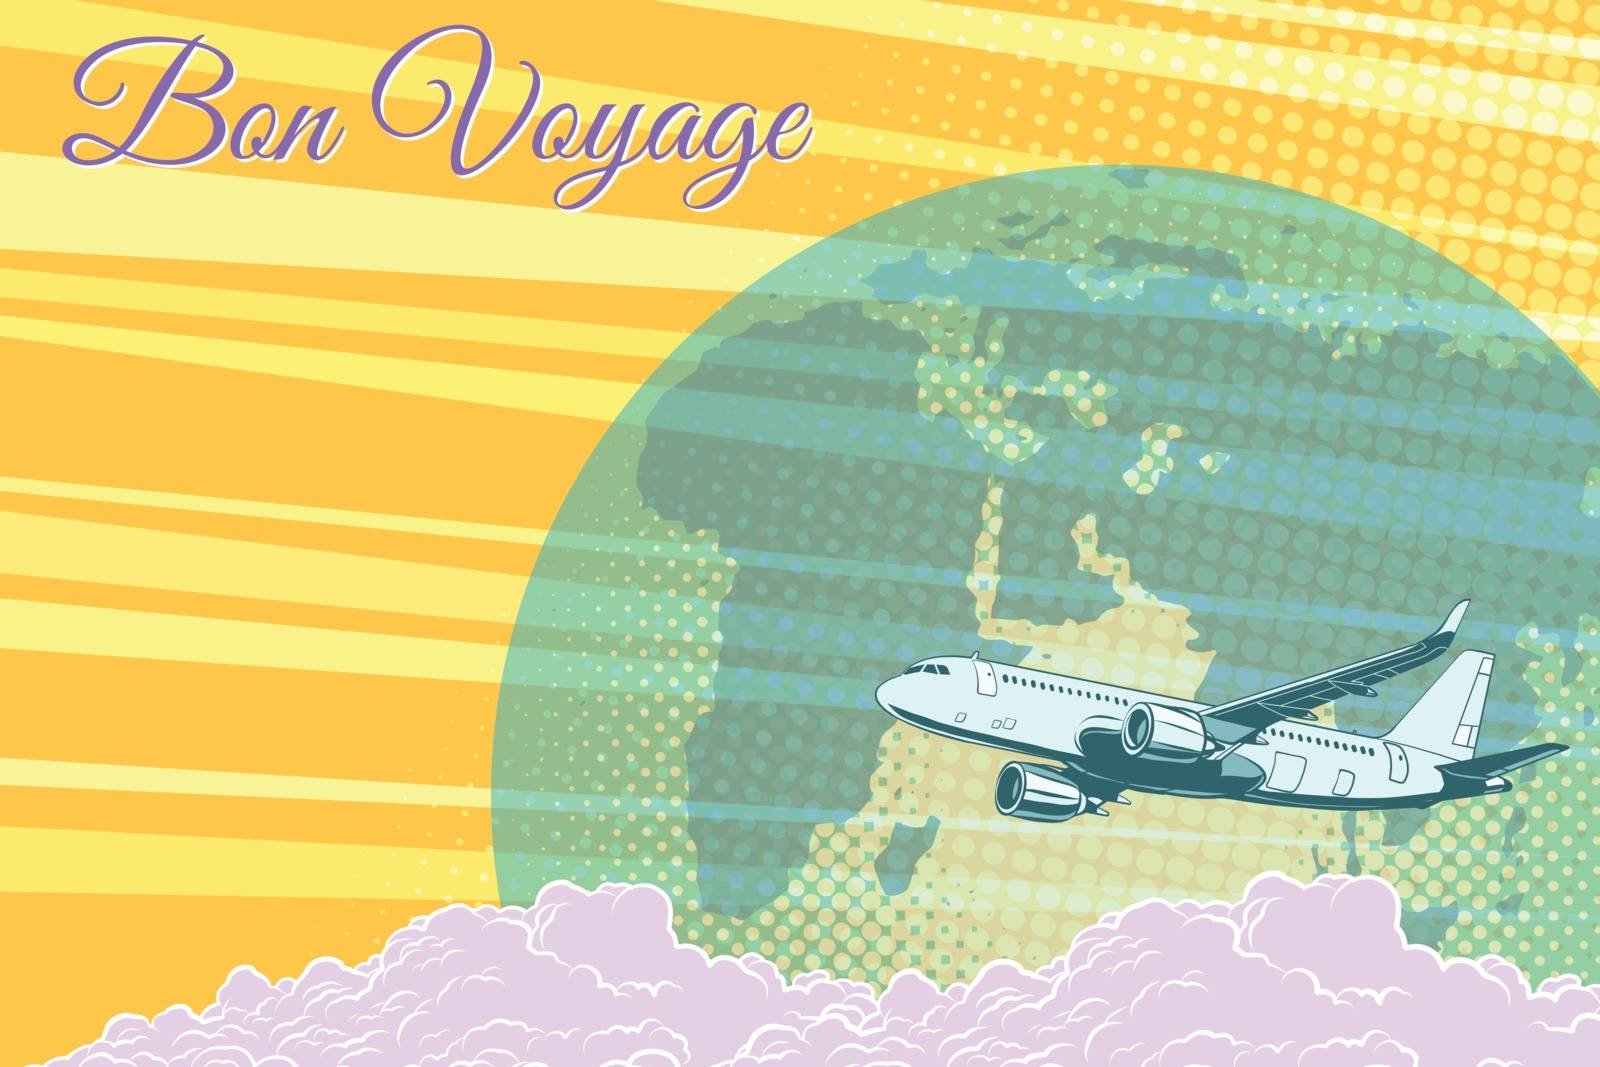 Plane flight travel tourism retro background Bon voyage. Pop art vector illustration